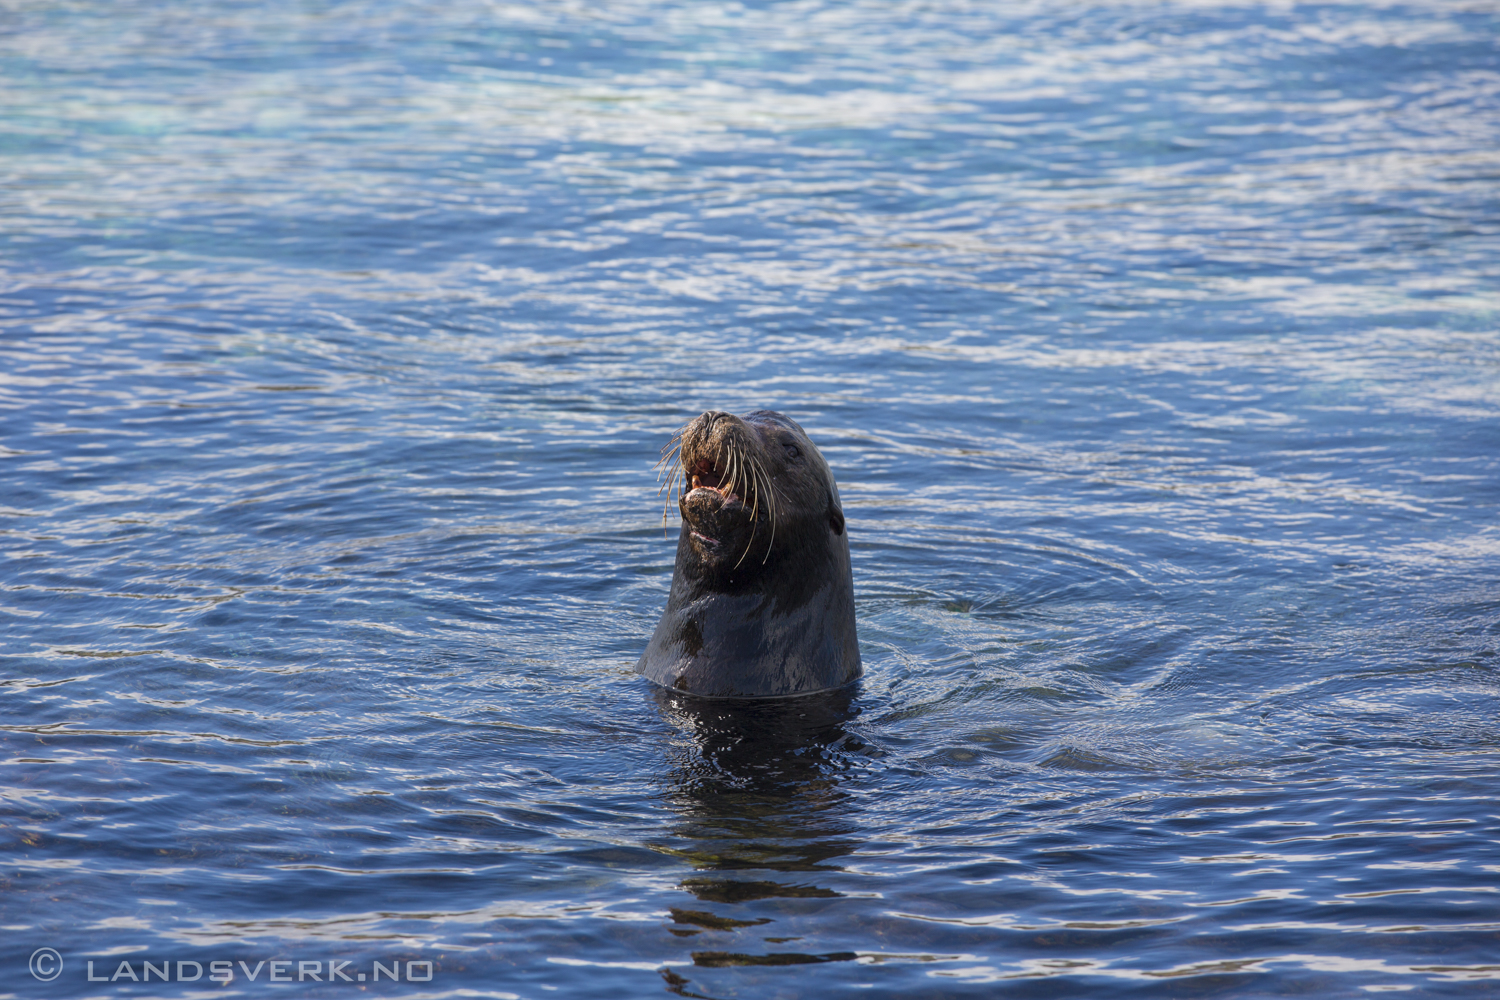 Wild Sea Lion, Isla Lobos, San Cristobal, Galapagos. 

(Canon EOS 5D Mark III / Canon EF 70-200mm f/2.8 L IS II USM)